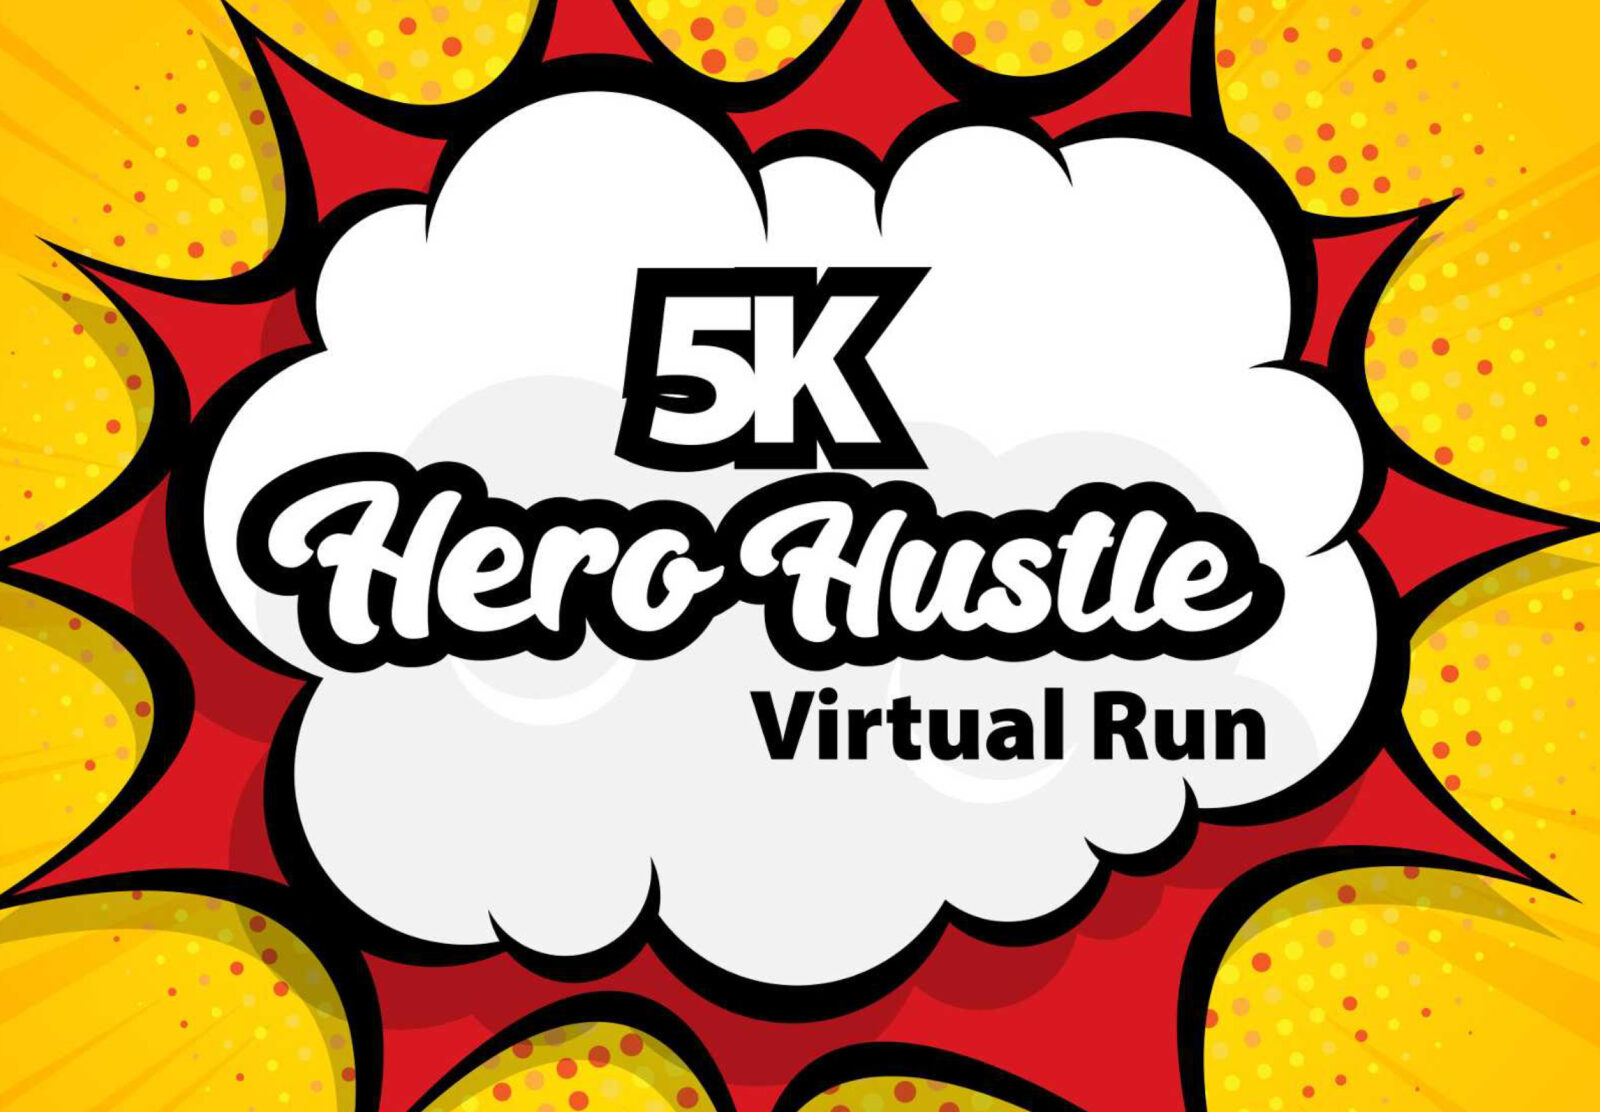 Hero Hustle 5k